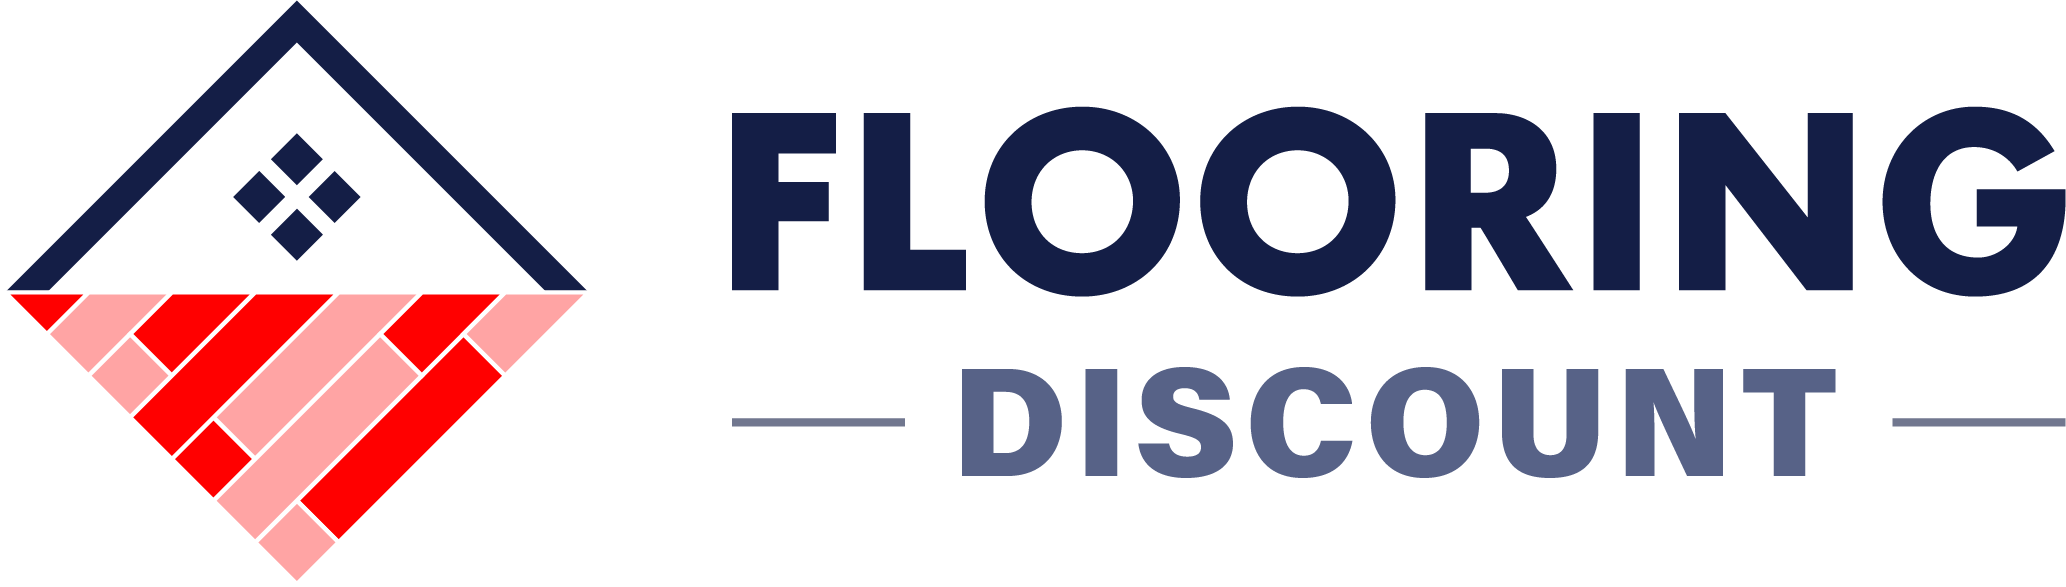 Flooring Discount